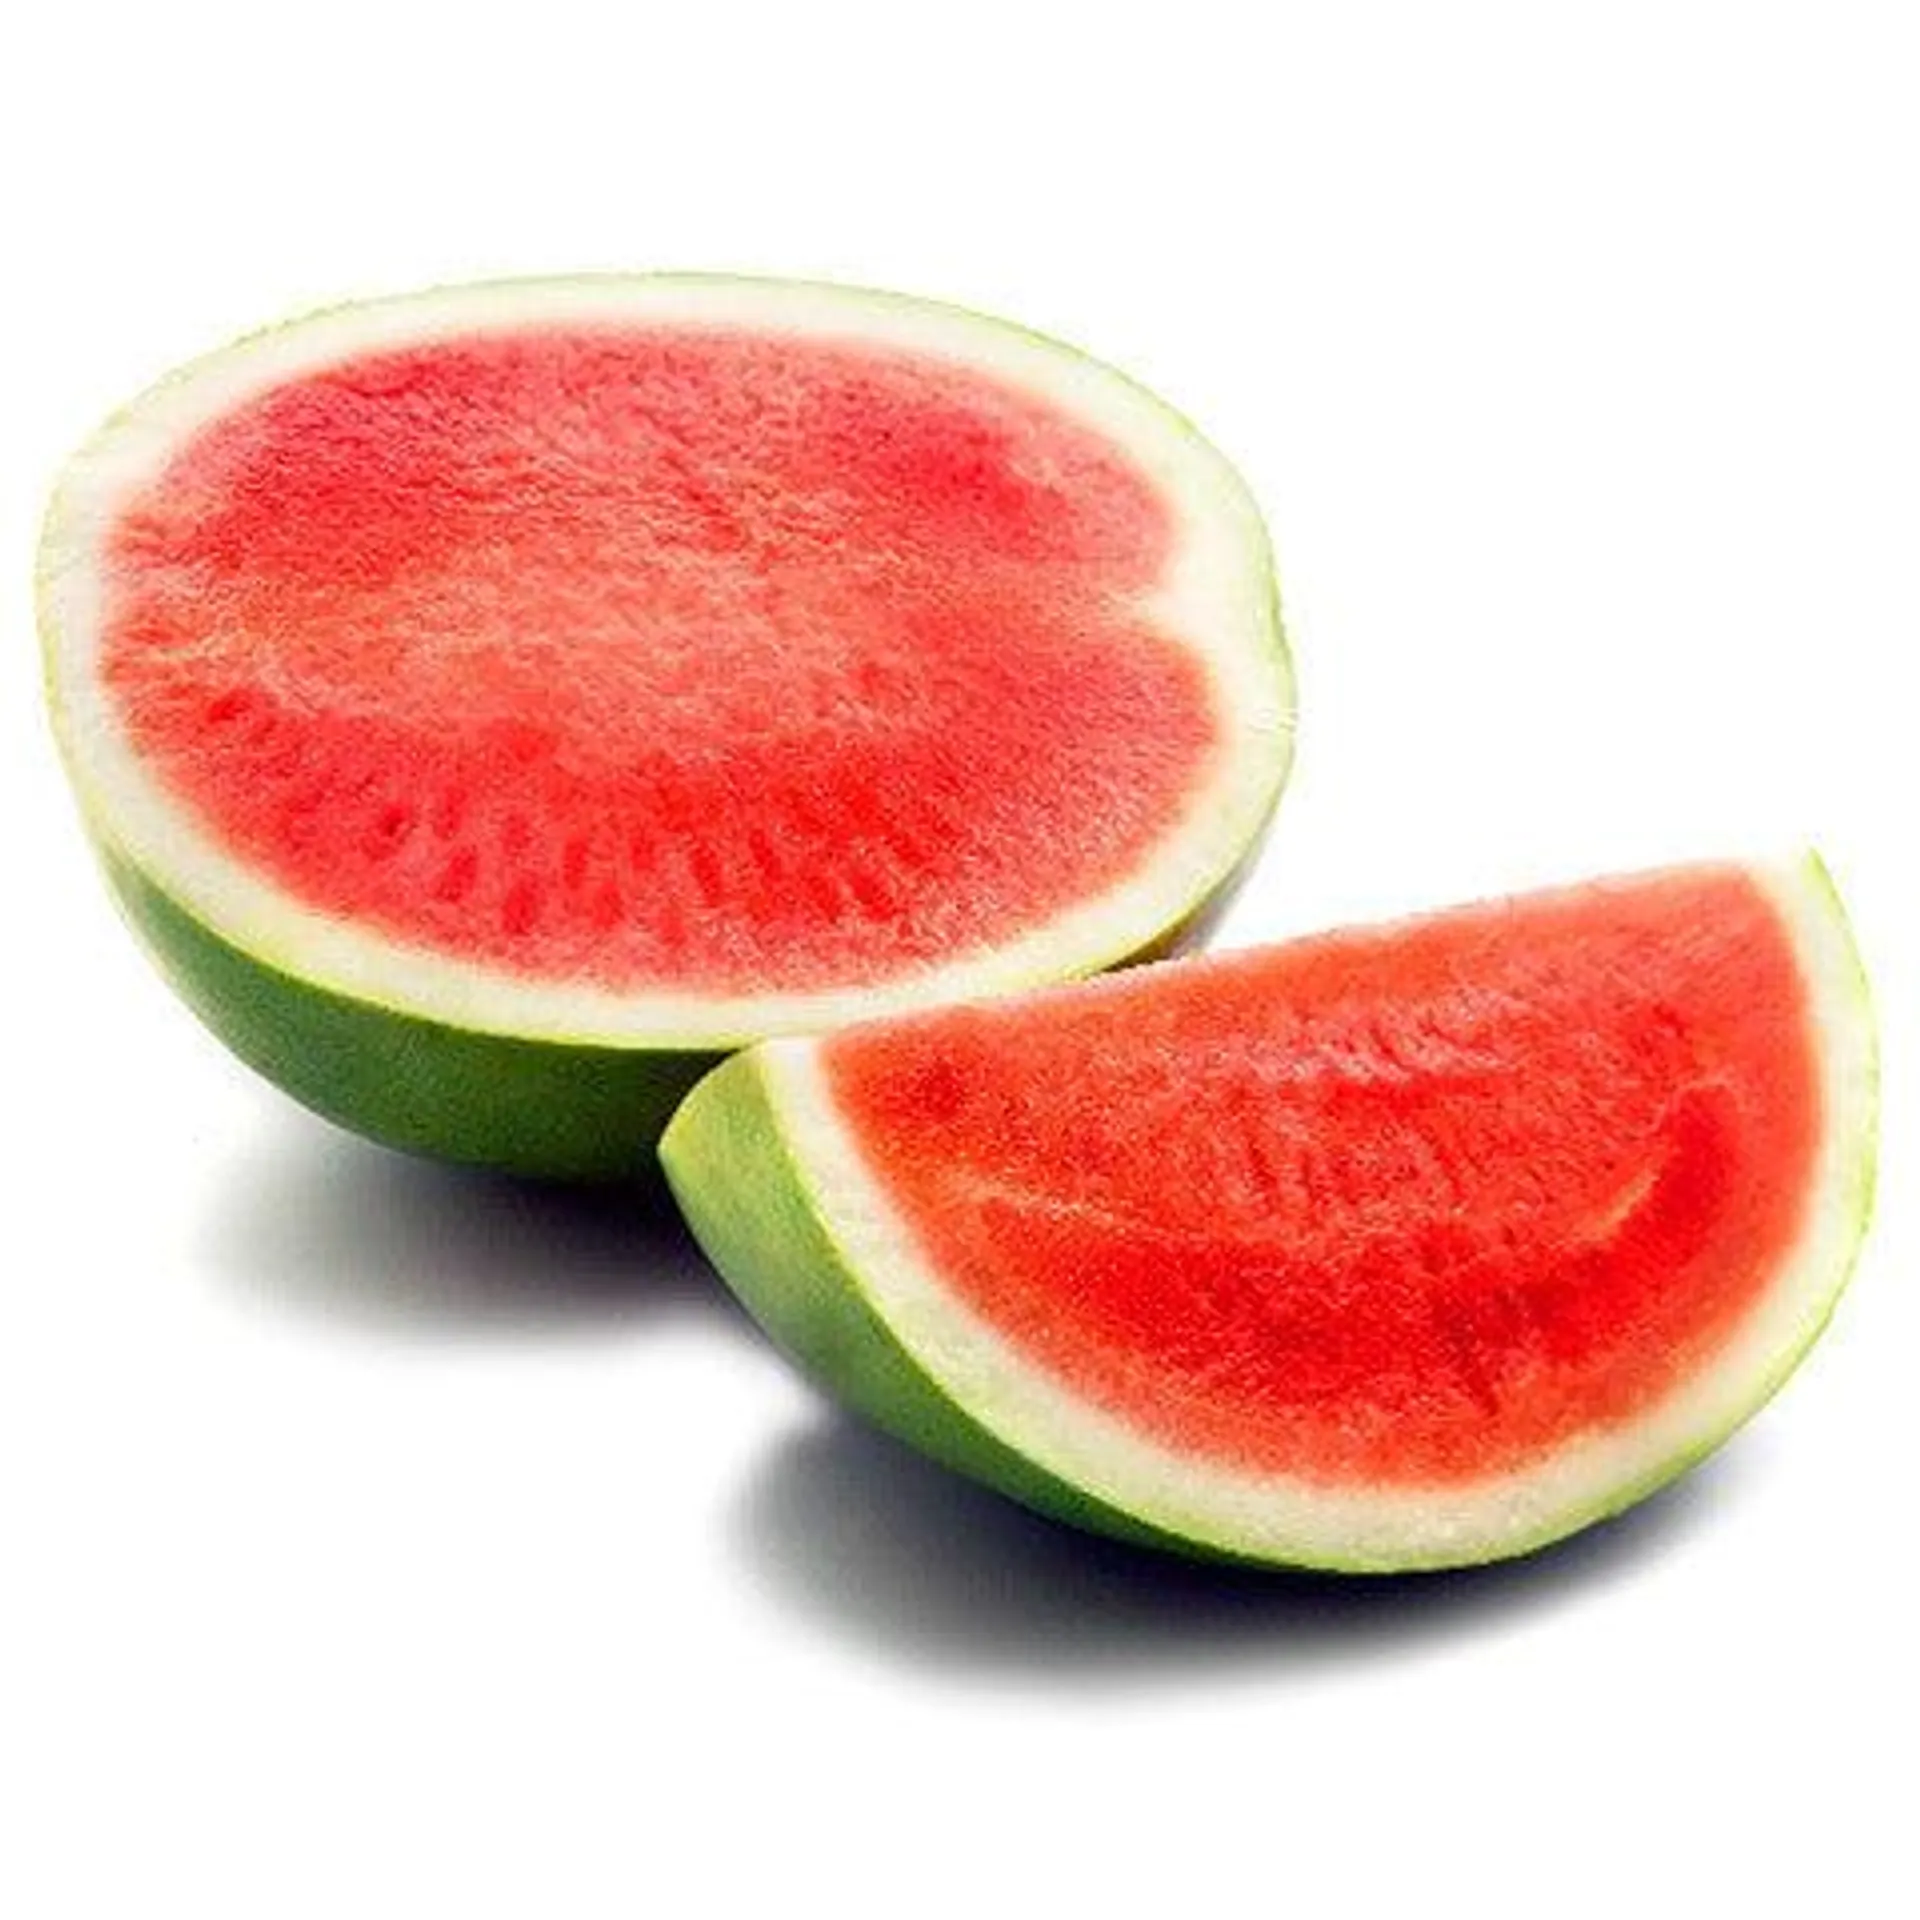 Melon Watermelon Seedless Whole Each